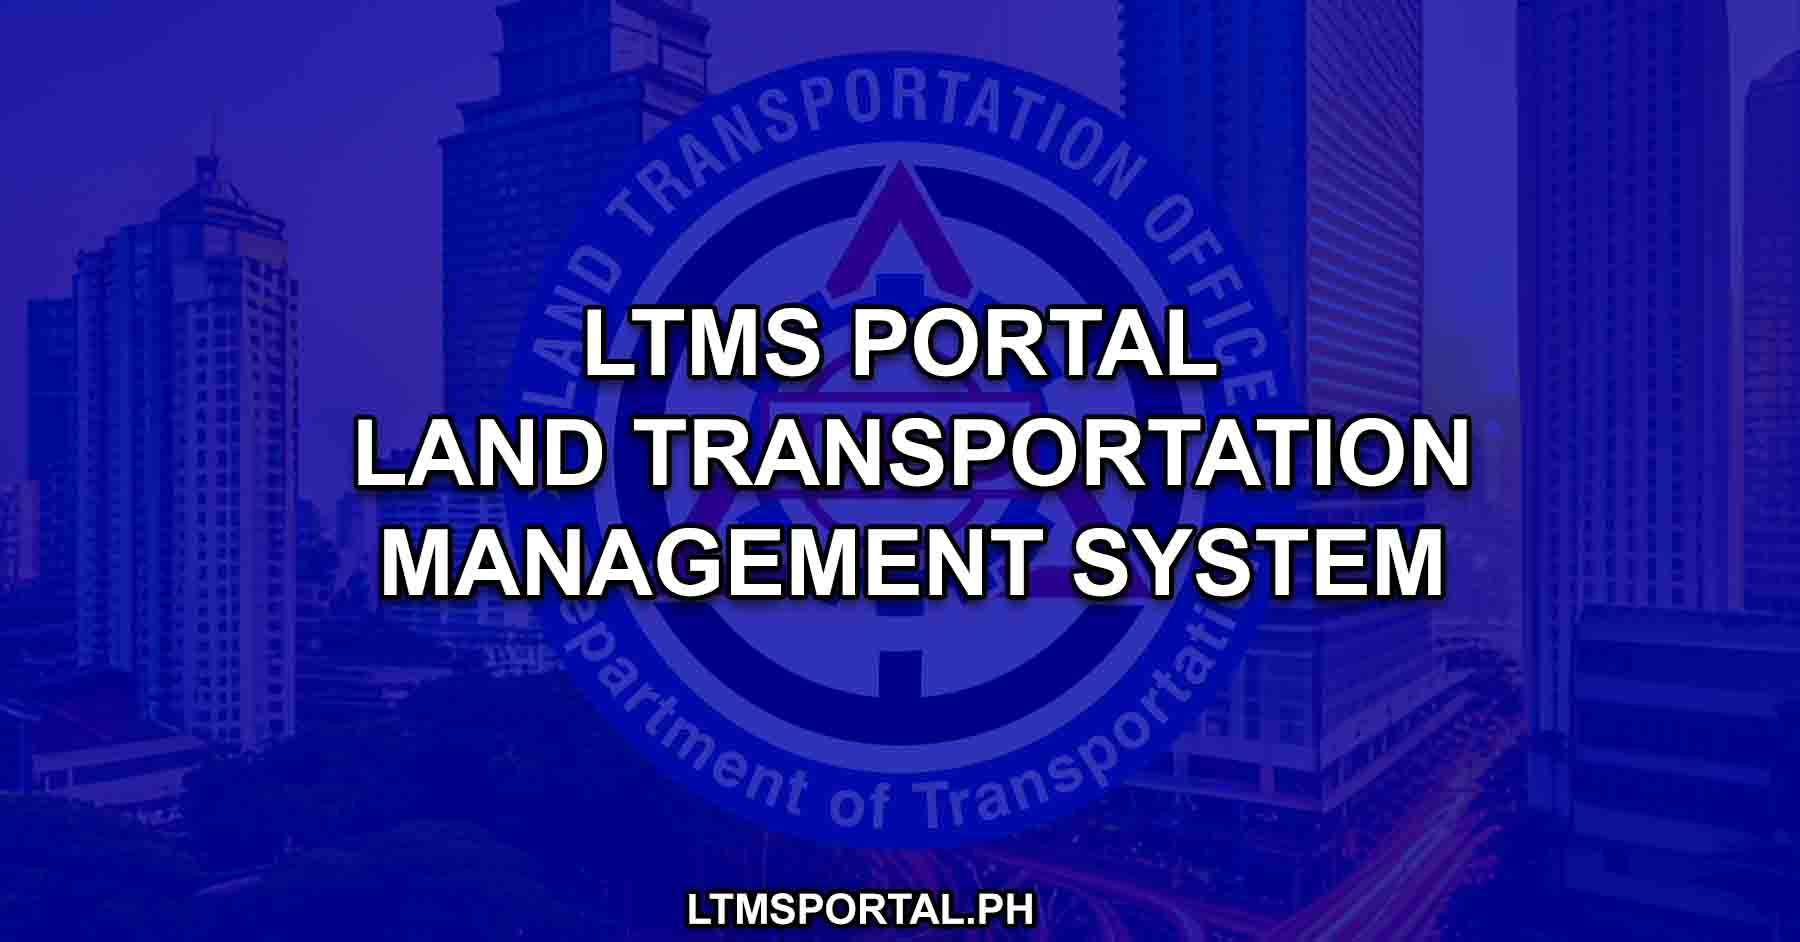 ltms portal philippines land transportation management system of lto